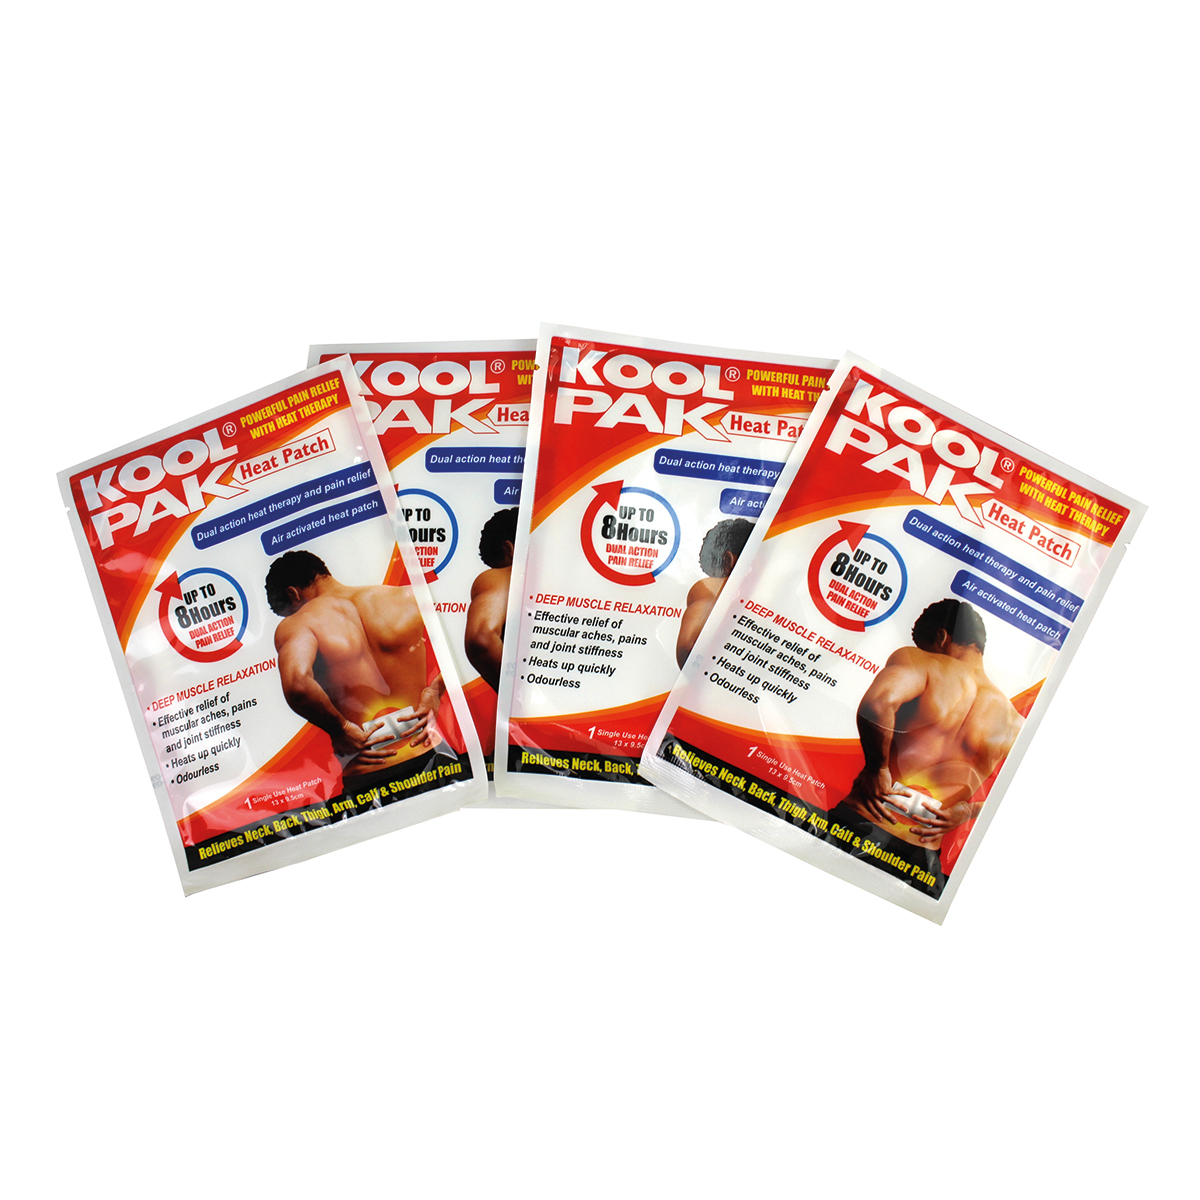 Box of 36 Packs of 4 13 x 9.5cm KoolPak® Heat Patch